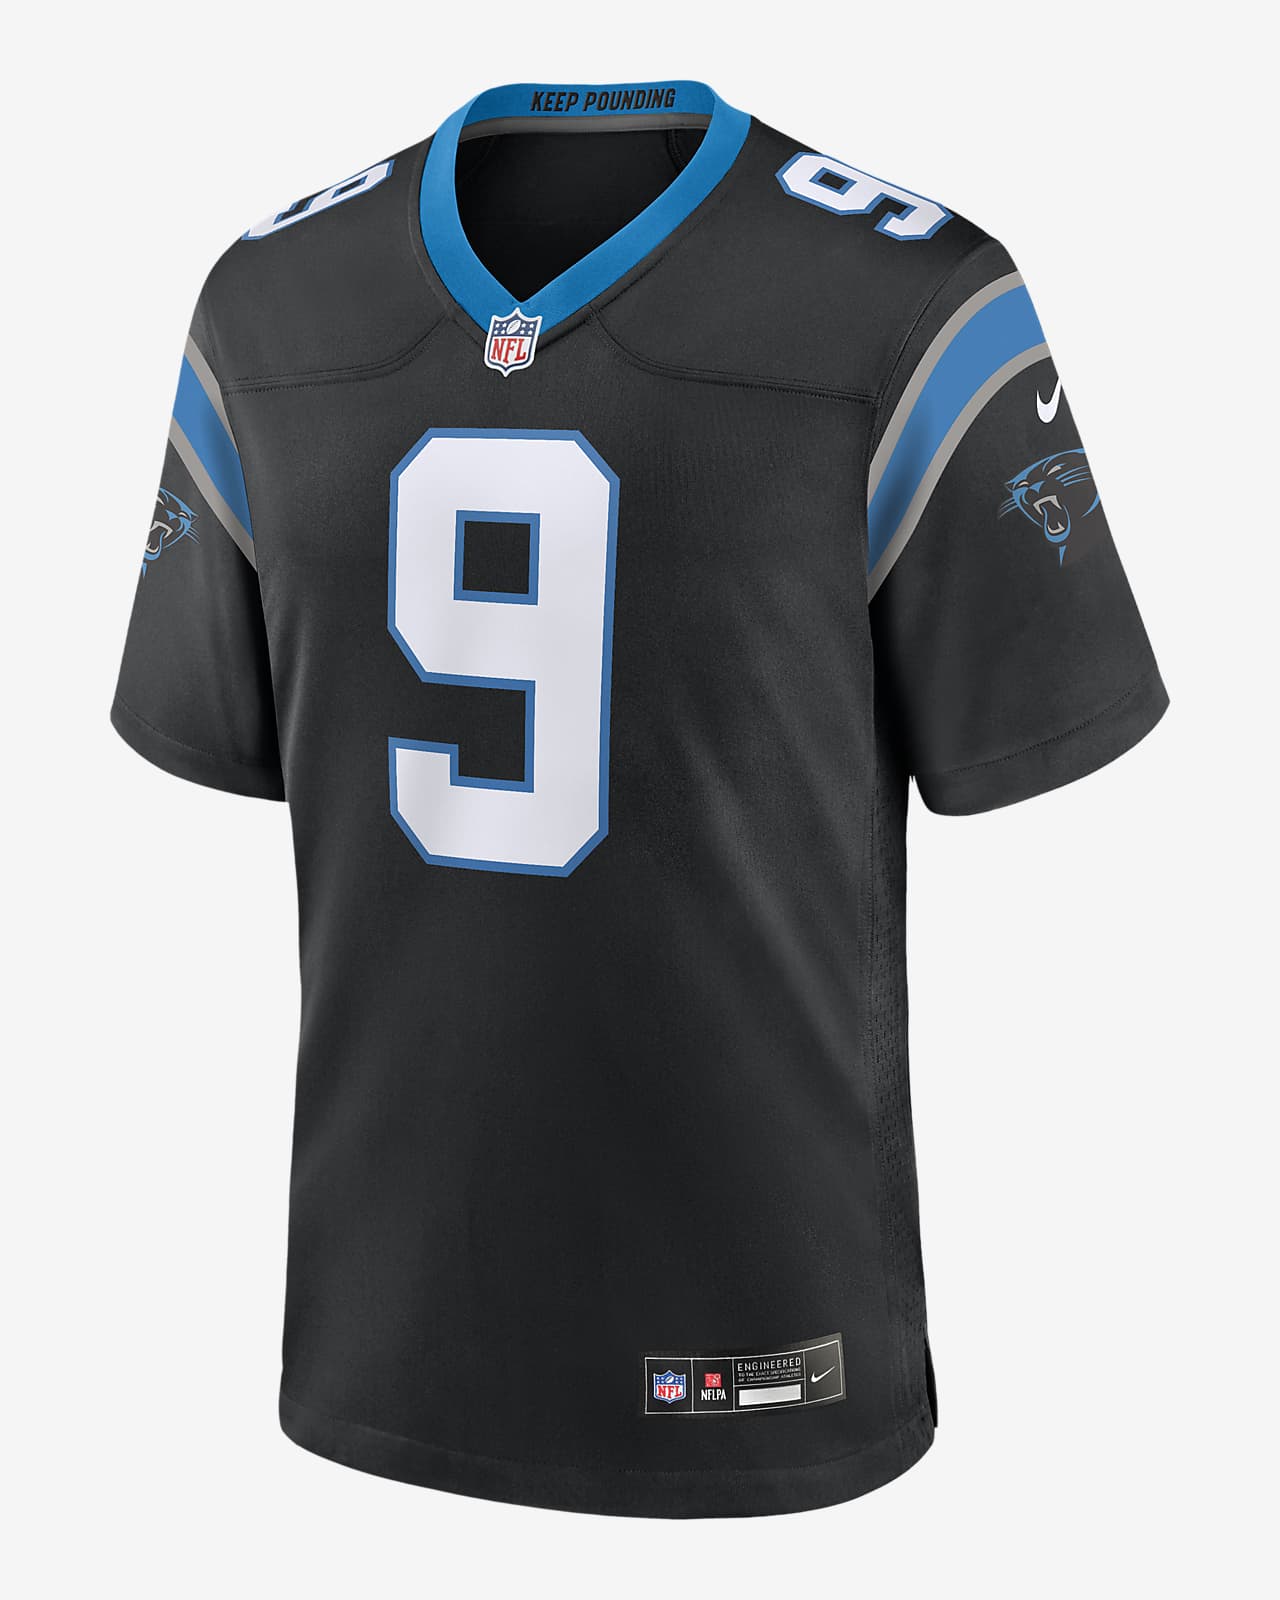 Jersey de fútbol americano Nike de la NFL Game para hombre Bryce Young Carolina Panthers